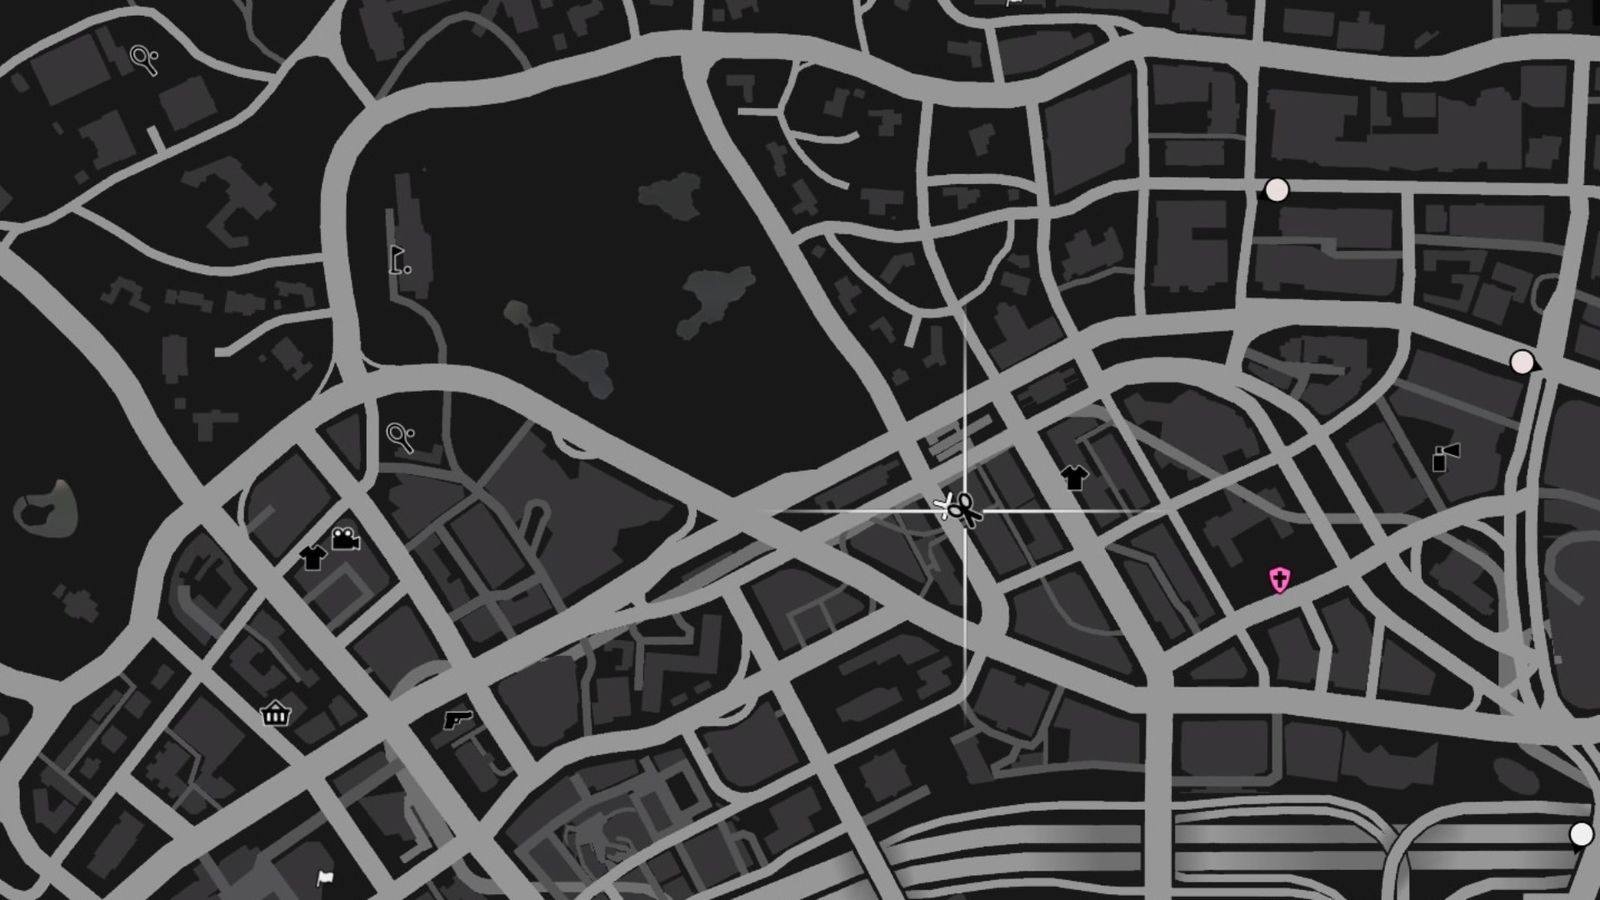 GTA Online Los Santos Map Bob Mulet Location and Record A Studios location indicator